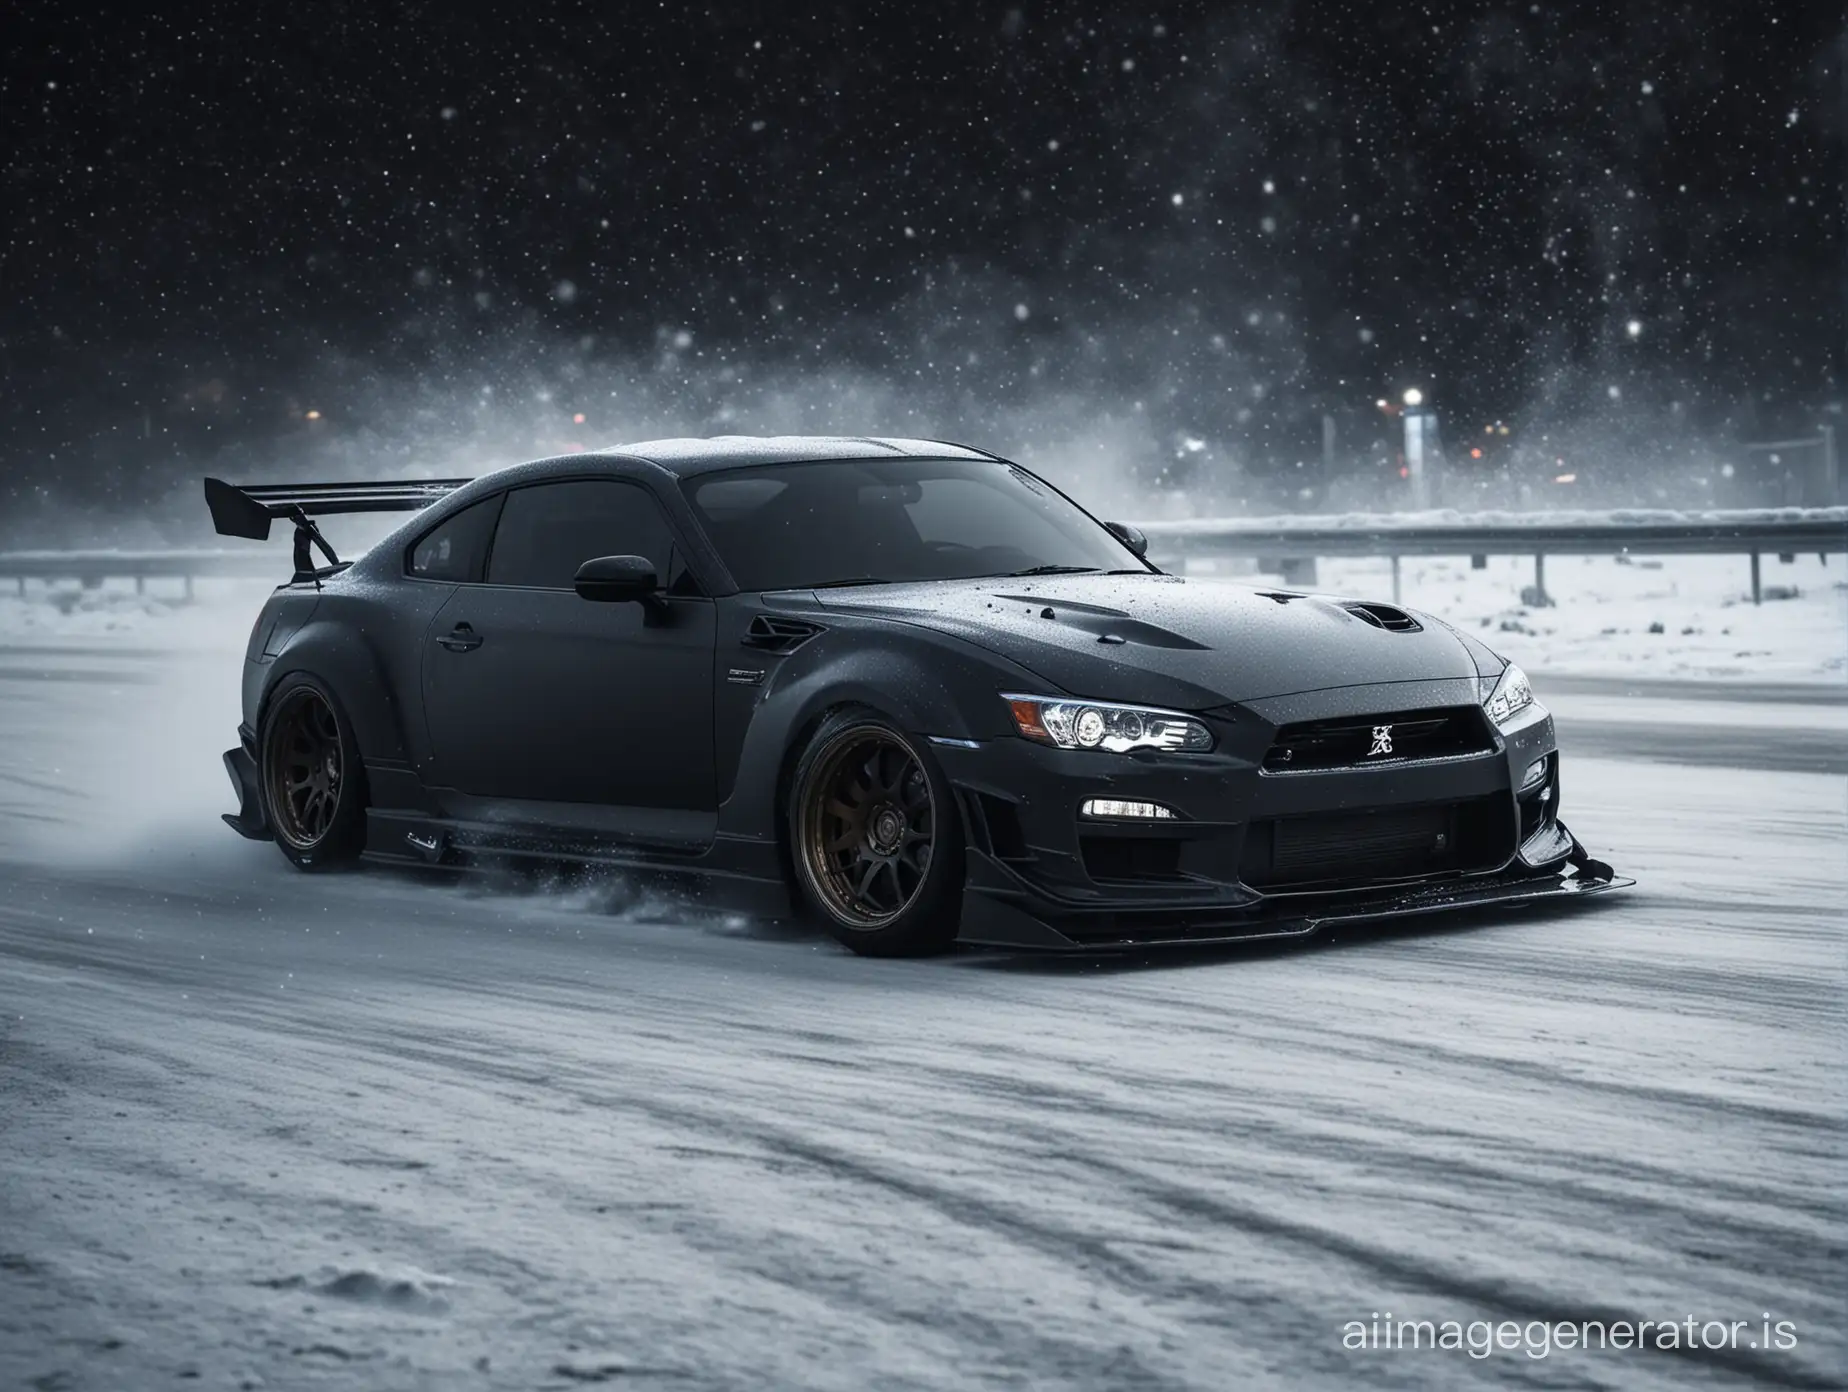 Japanese-Night-Drift-Racing-Dark-Carbon-Car-Drifting-on-Snowy-Road